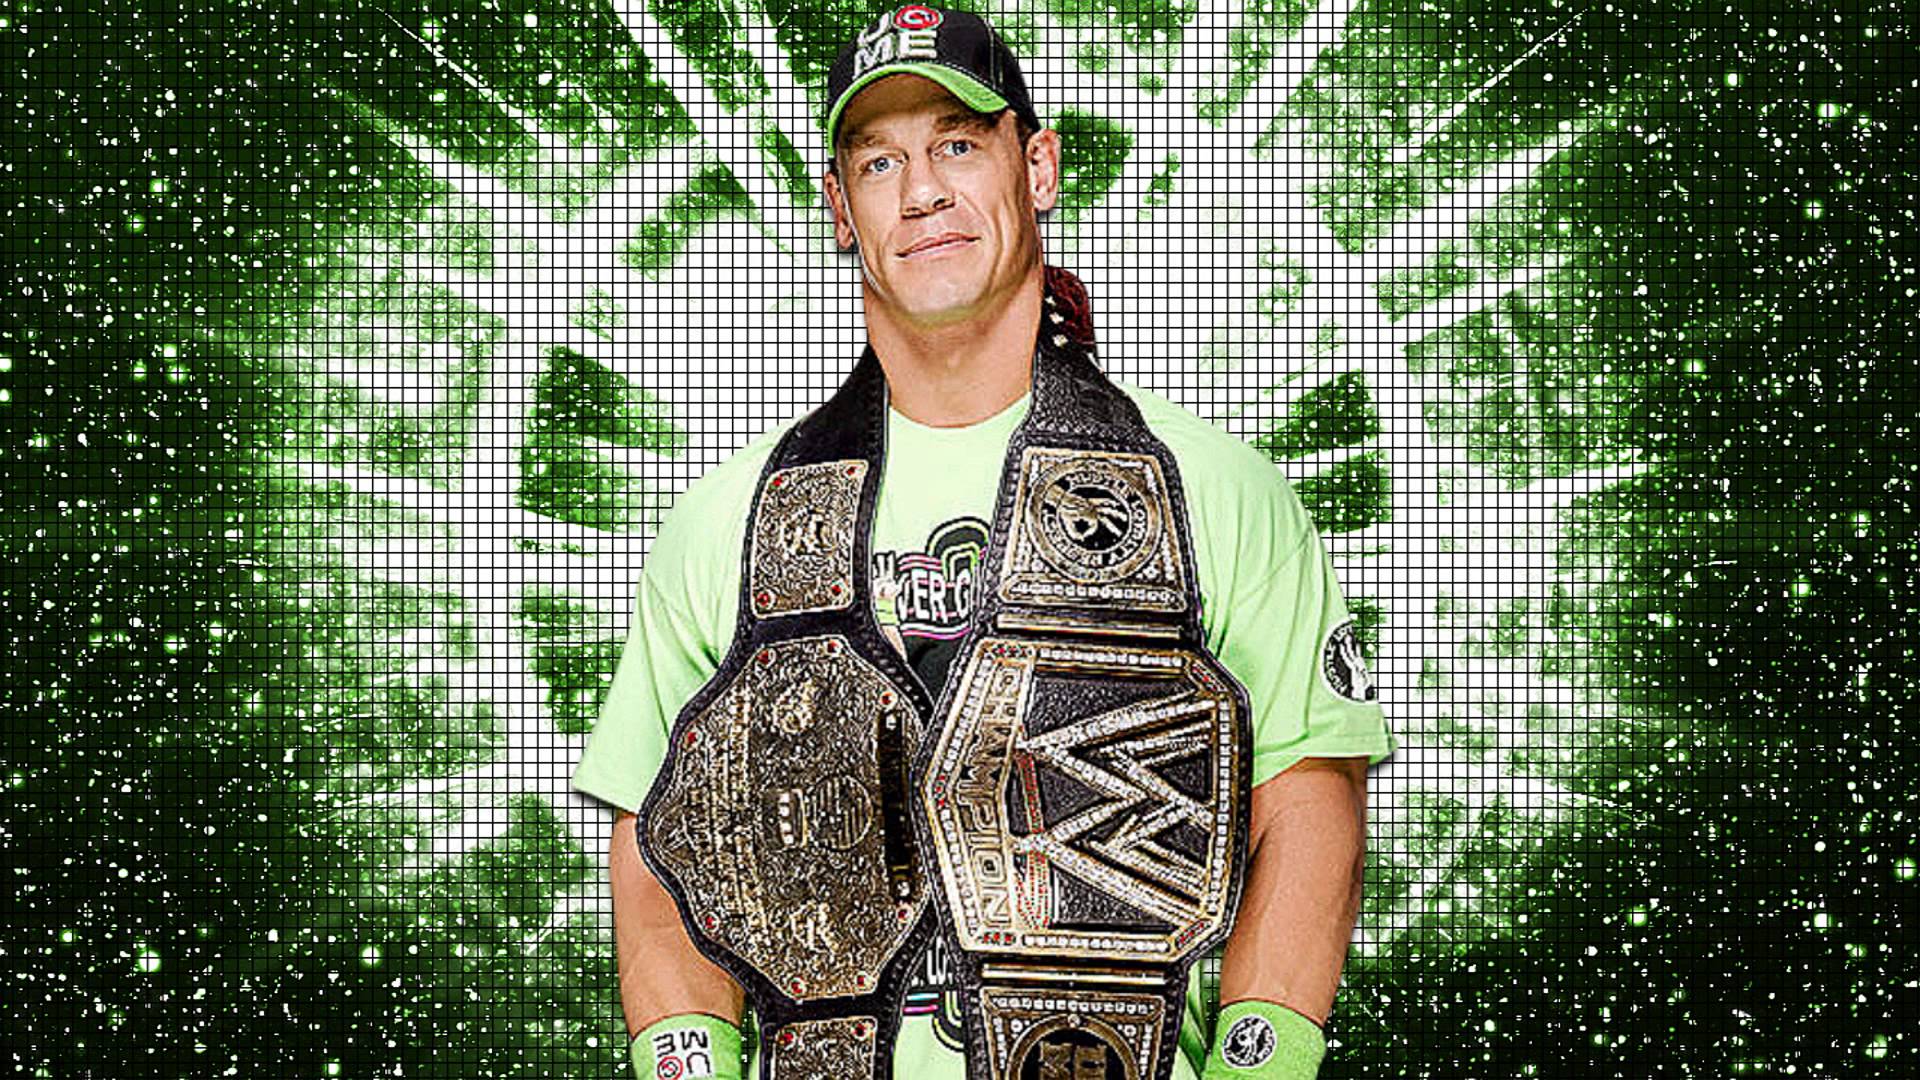 Wwe Super Star John Cena With Belts Free Download HD Mobile